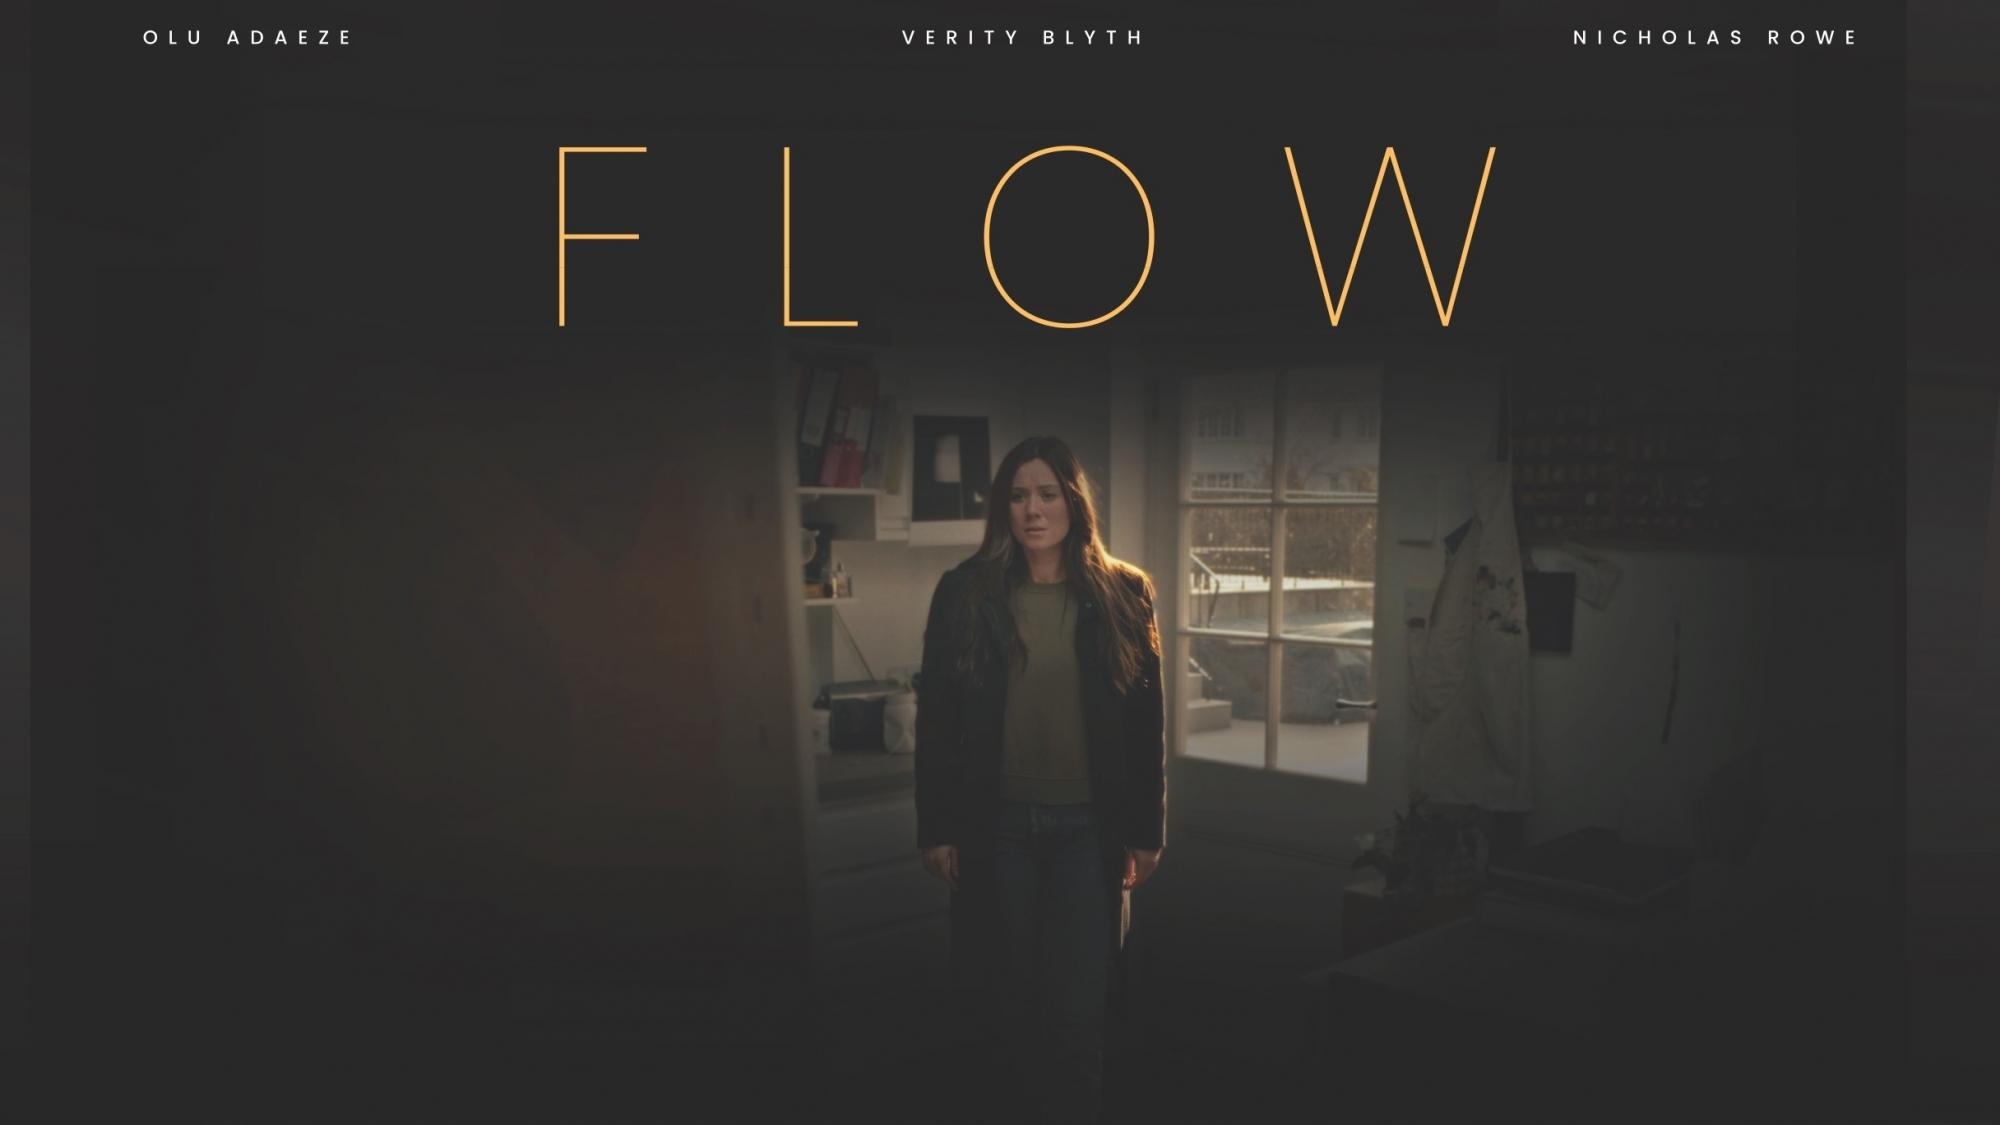 Film poster for 'Flow' depicting a woman standing in doorway